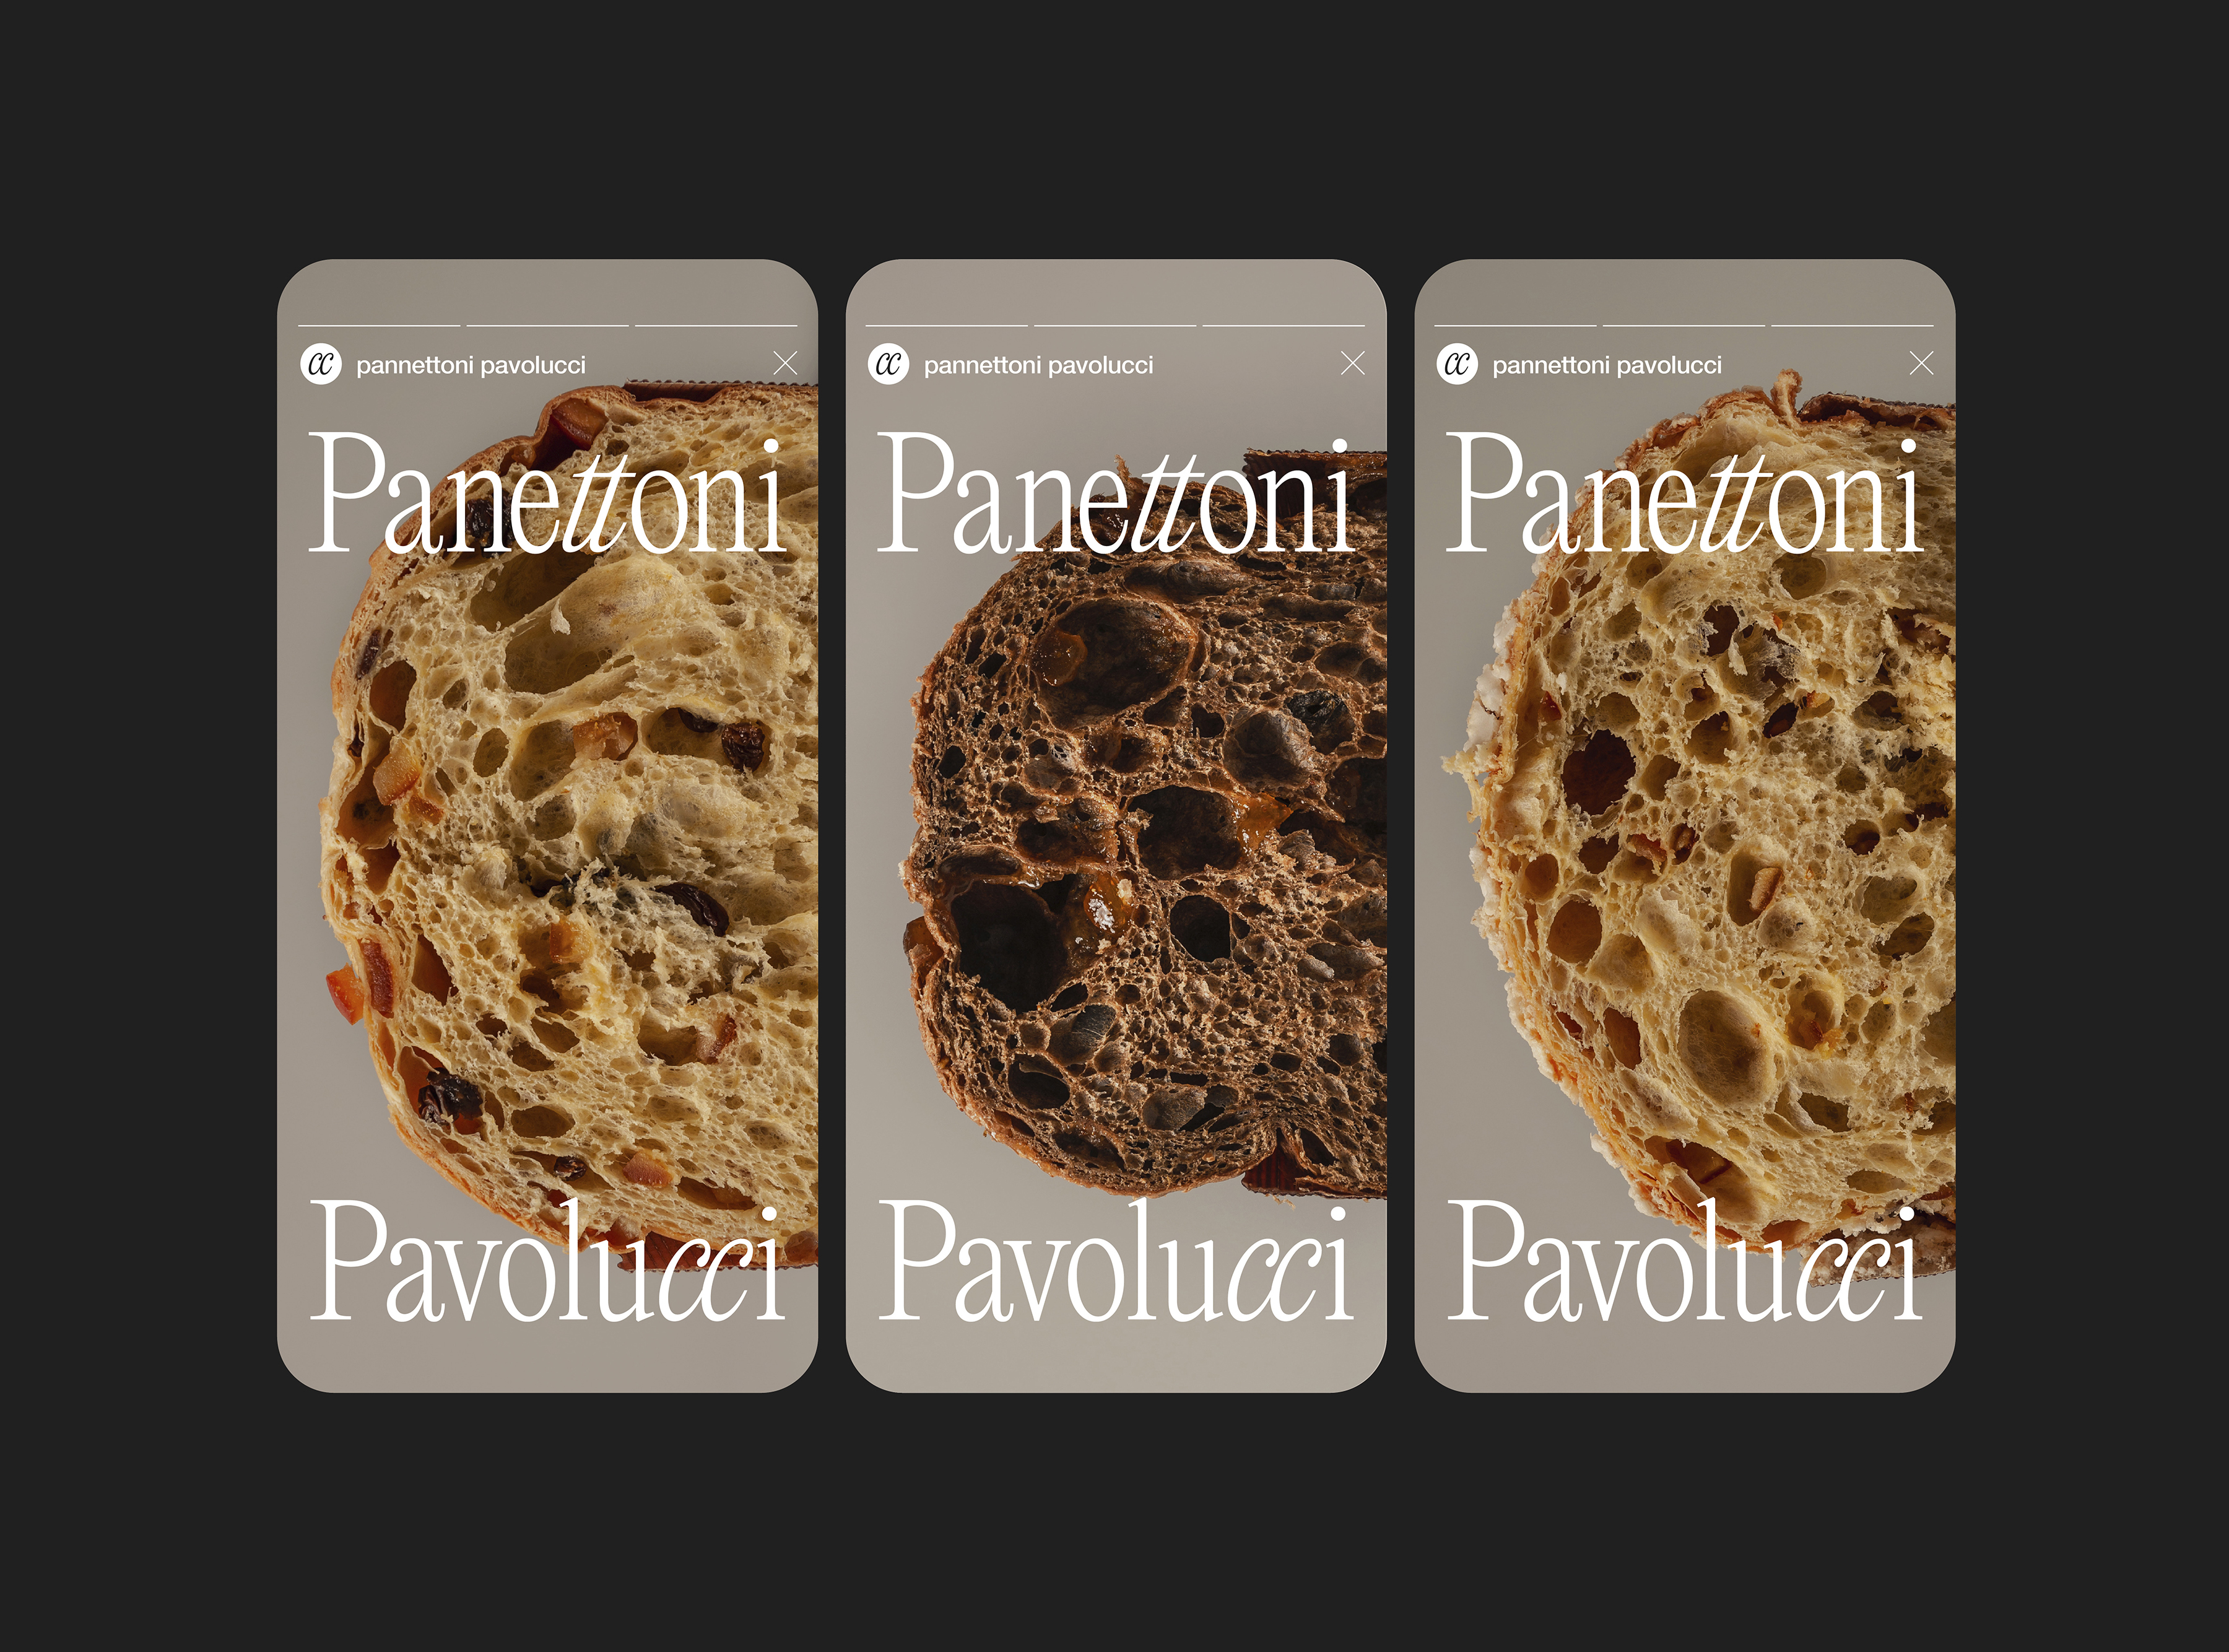 Digital branding by Requena for Spanish panettone brand Panettoni Pavolucci